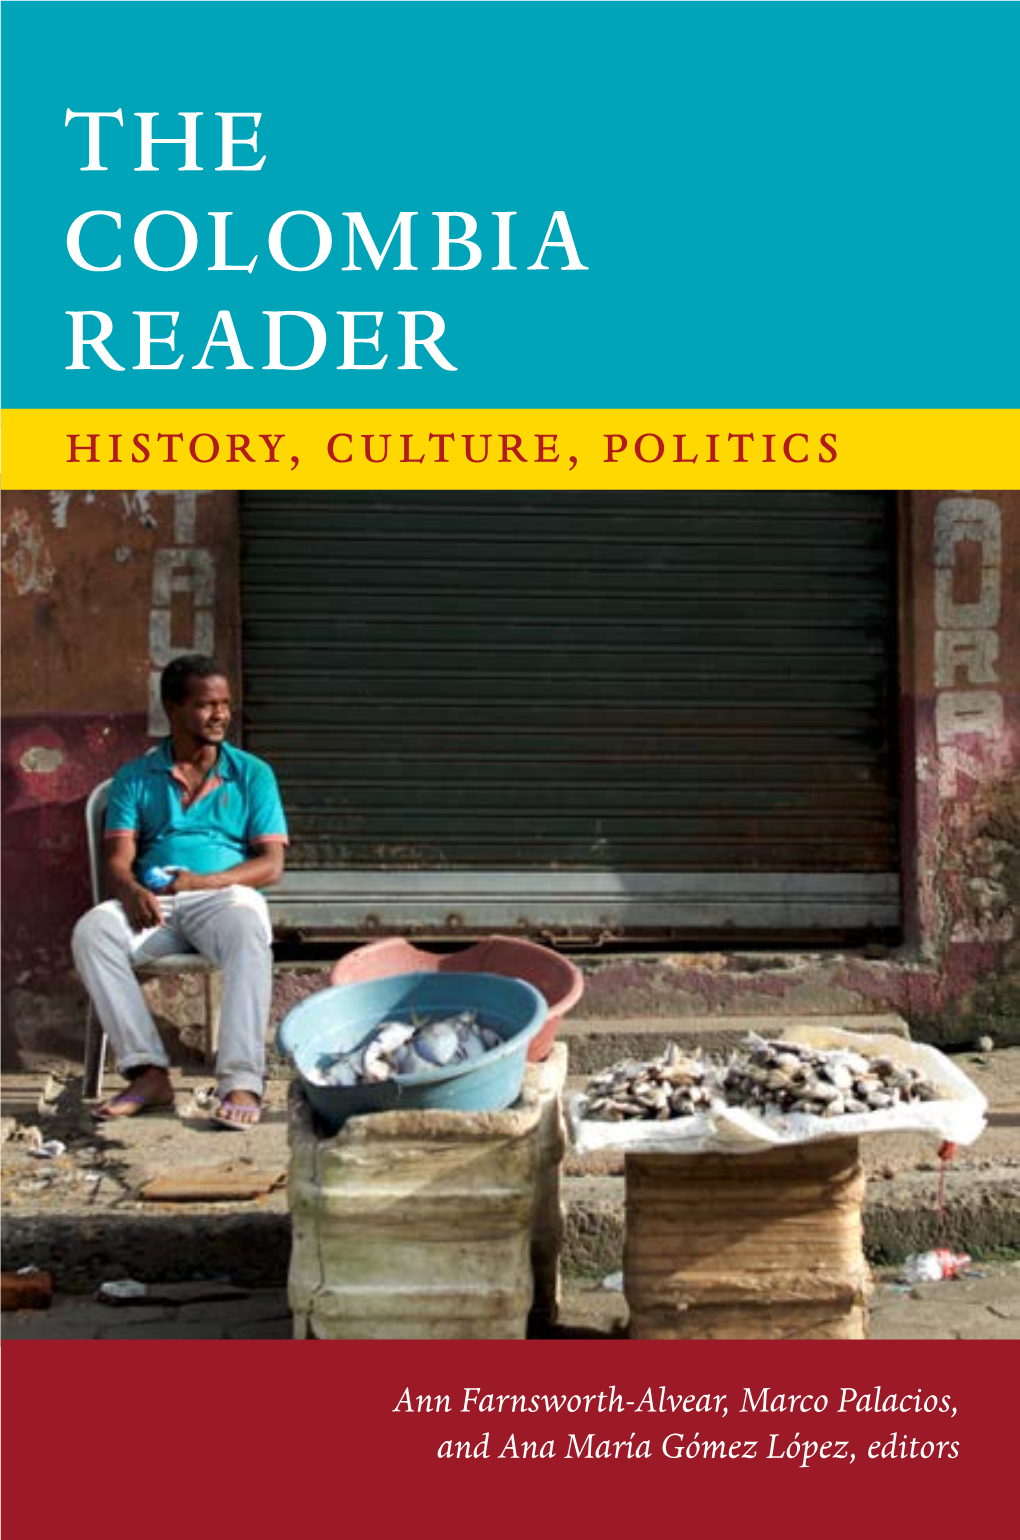 THE COLOMBIA READER History, Culture, Politics